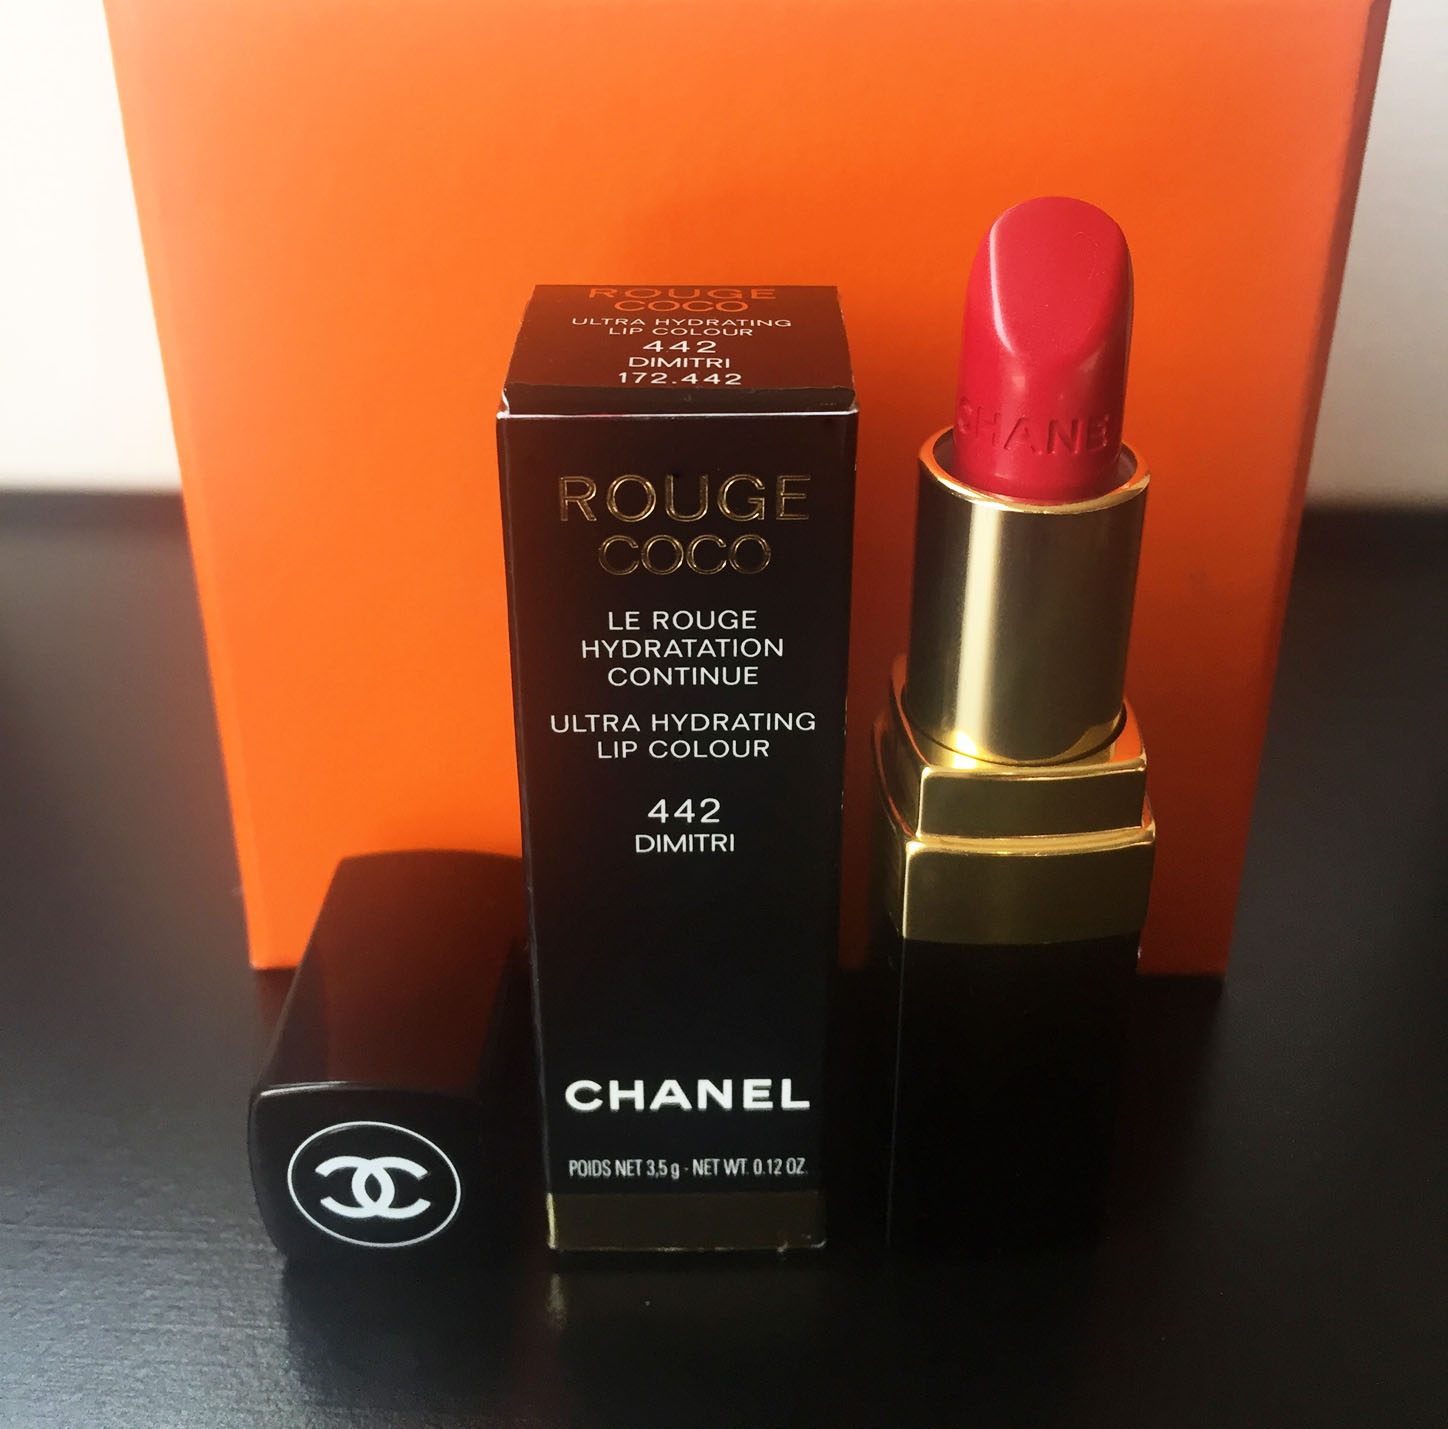 Chanel Rogue COCO ultra hydrating lip color in dimitri